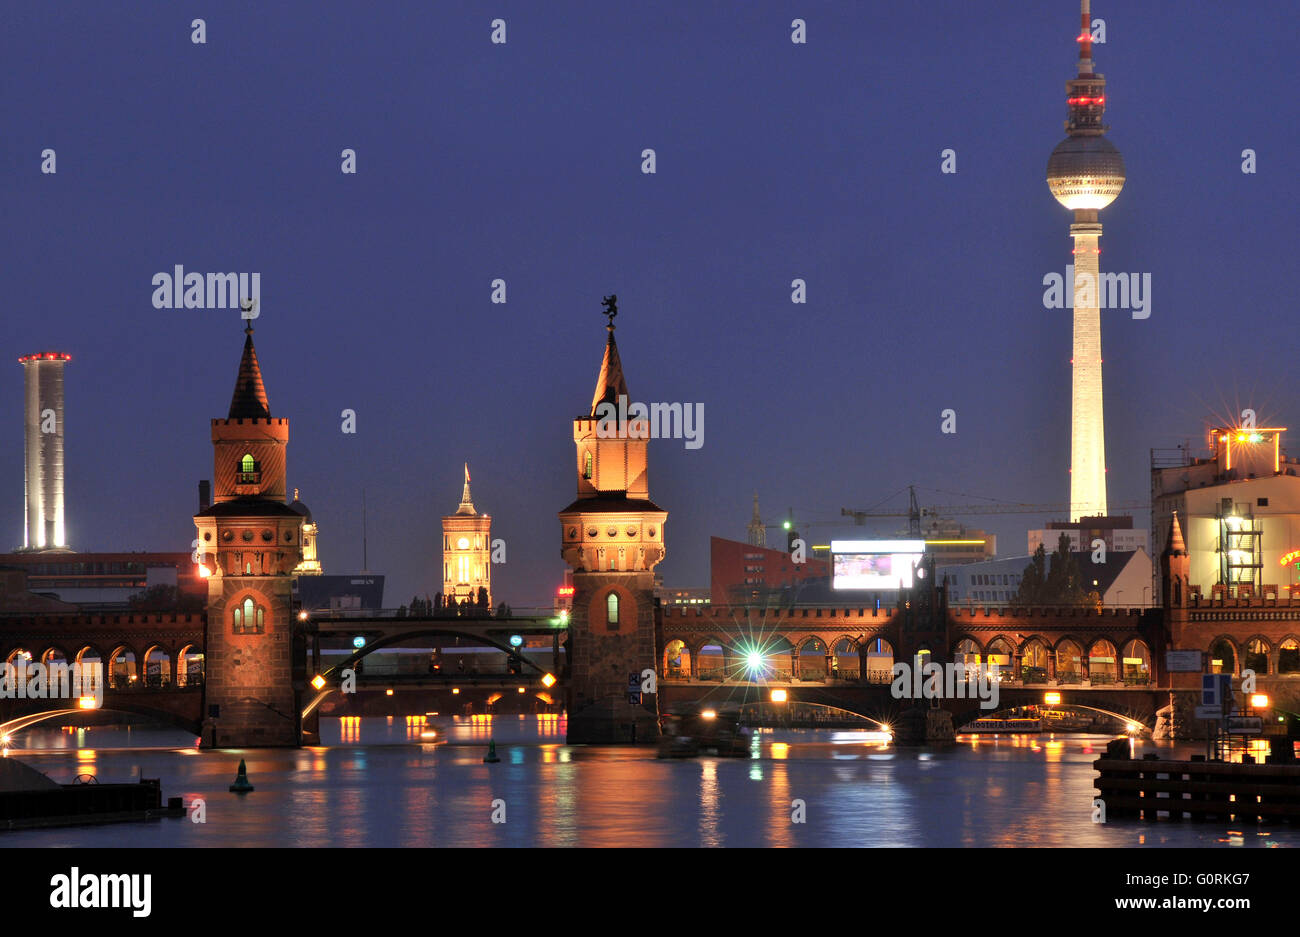 TV-Turm, Oberbaumbrücke, Spree, Berlin, Deutschland / Oberbaumbrücke, Oberbaumbr? Cke, Fernsehturm, Fernsehturm Stockfoto